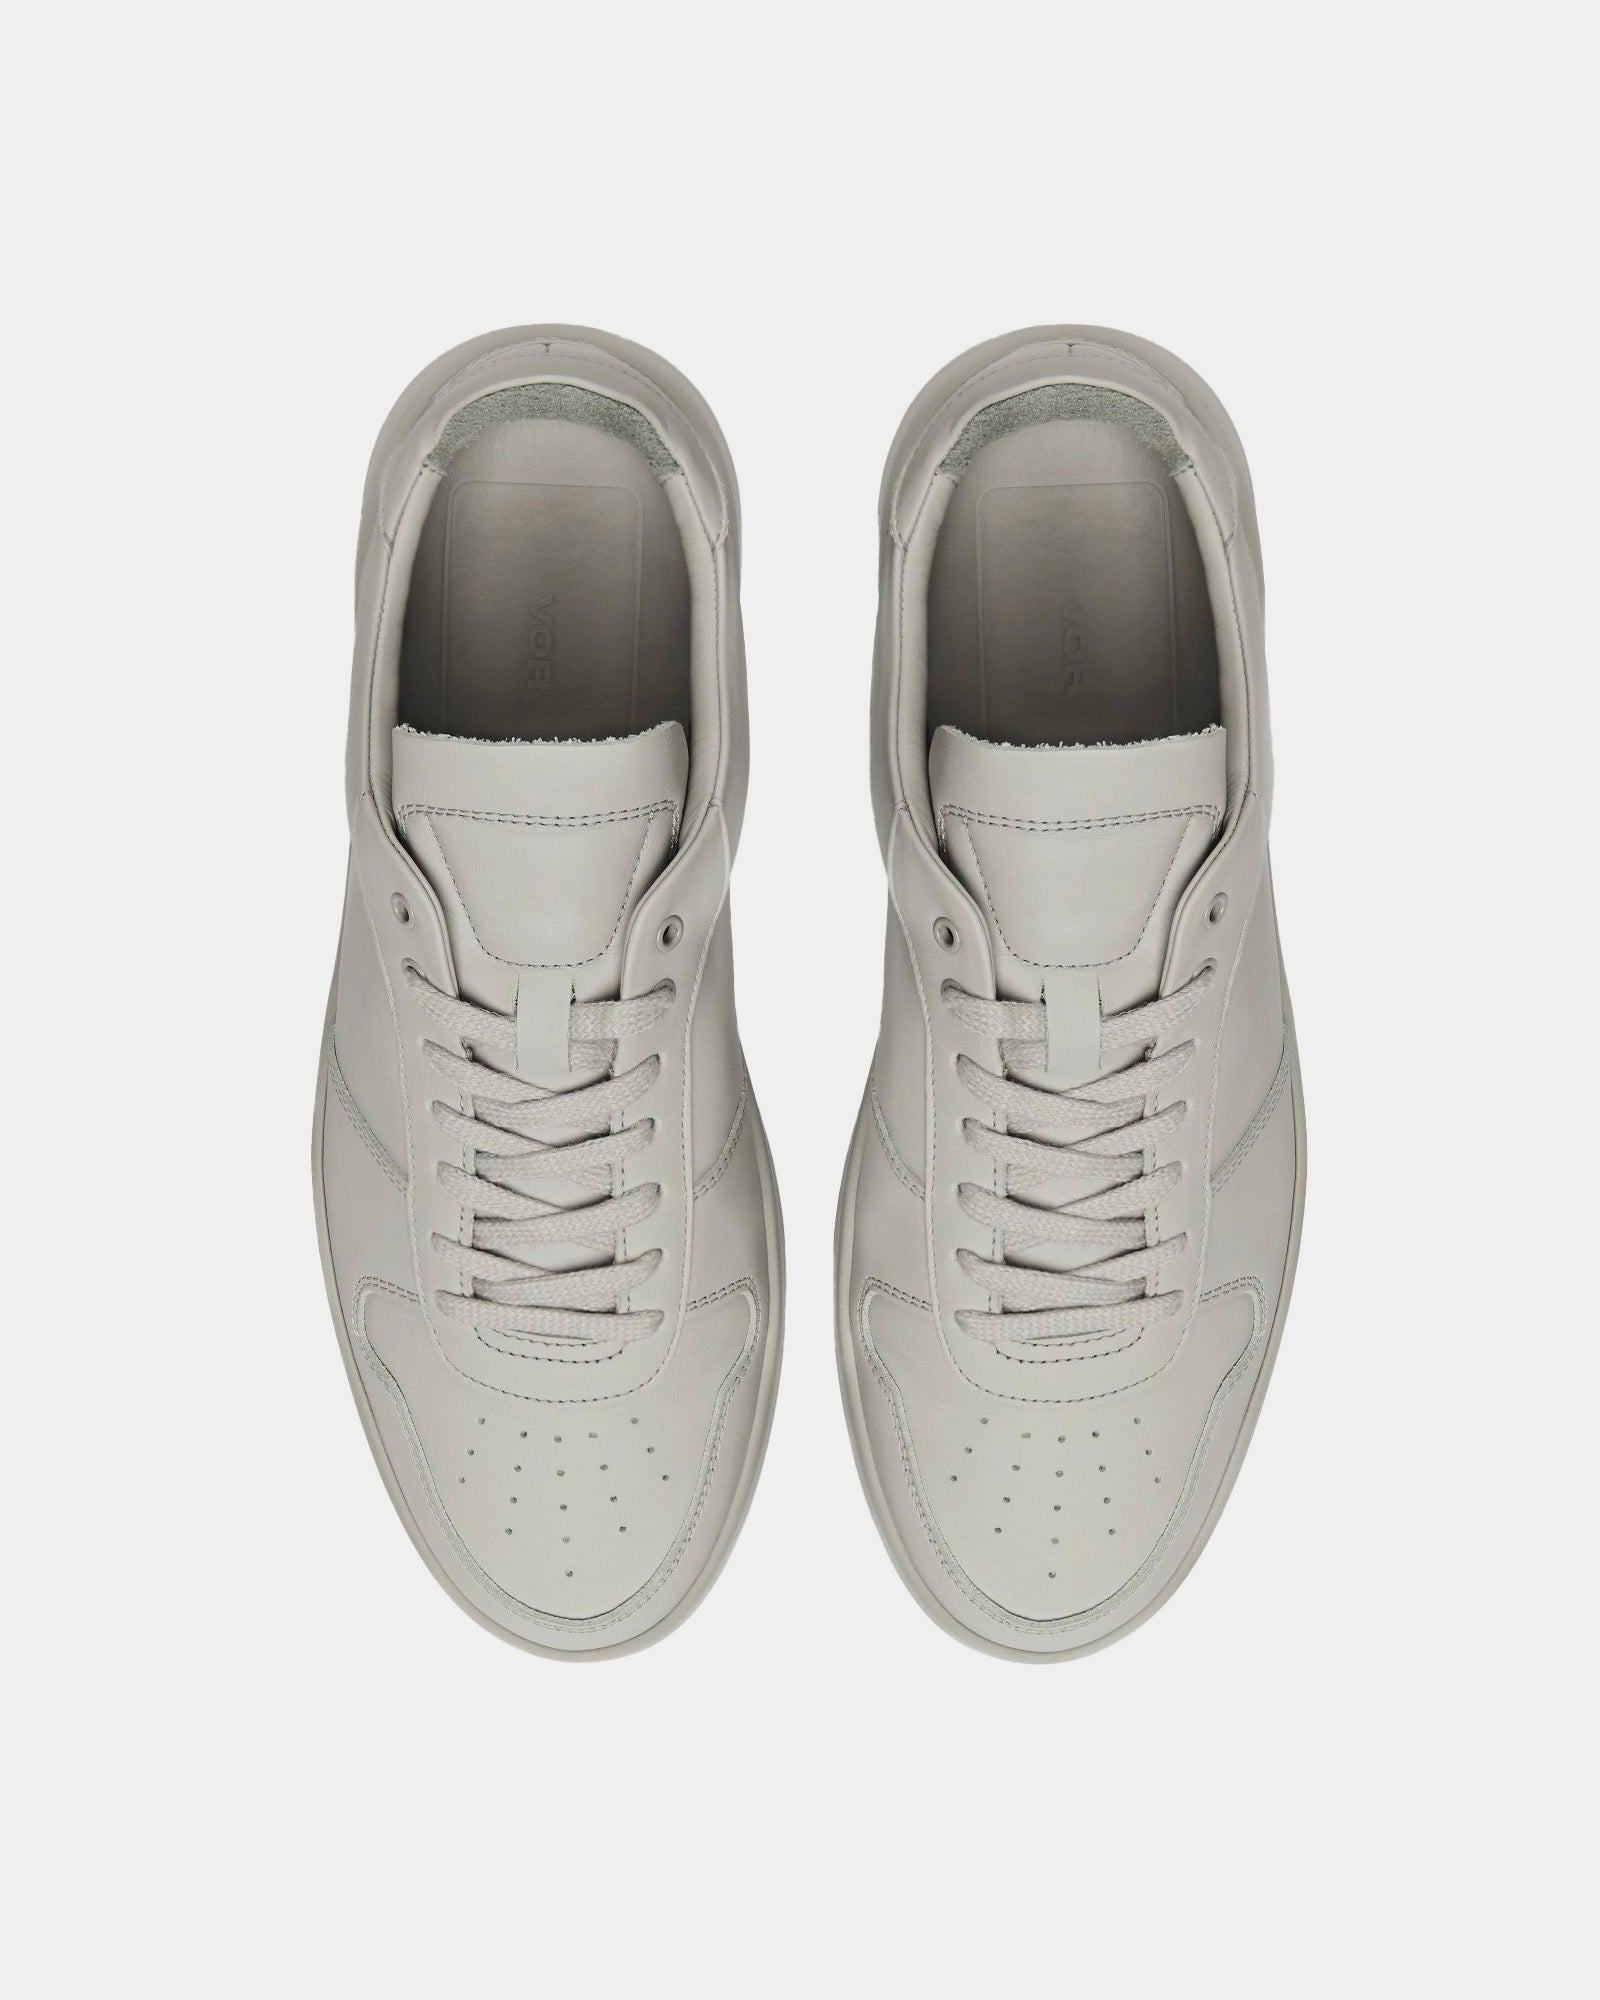 Vor - 5A Technograu Grey Low Top Sneakers